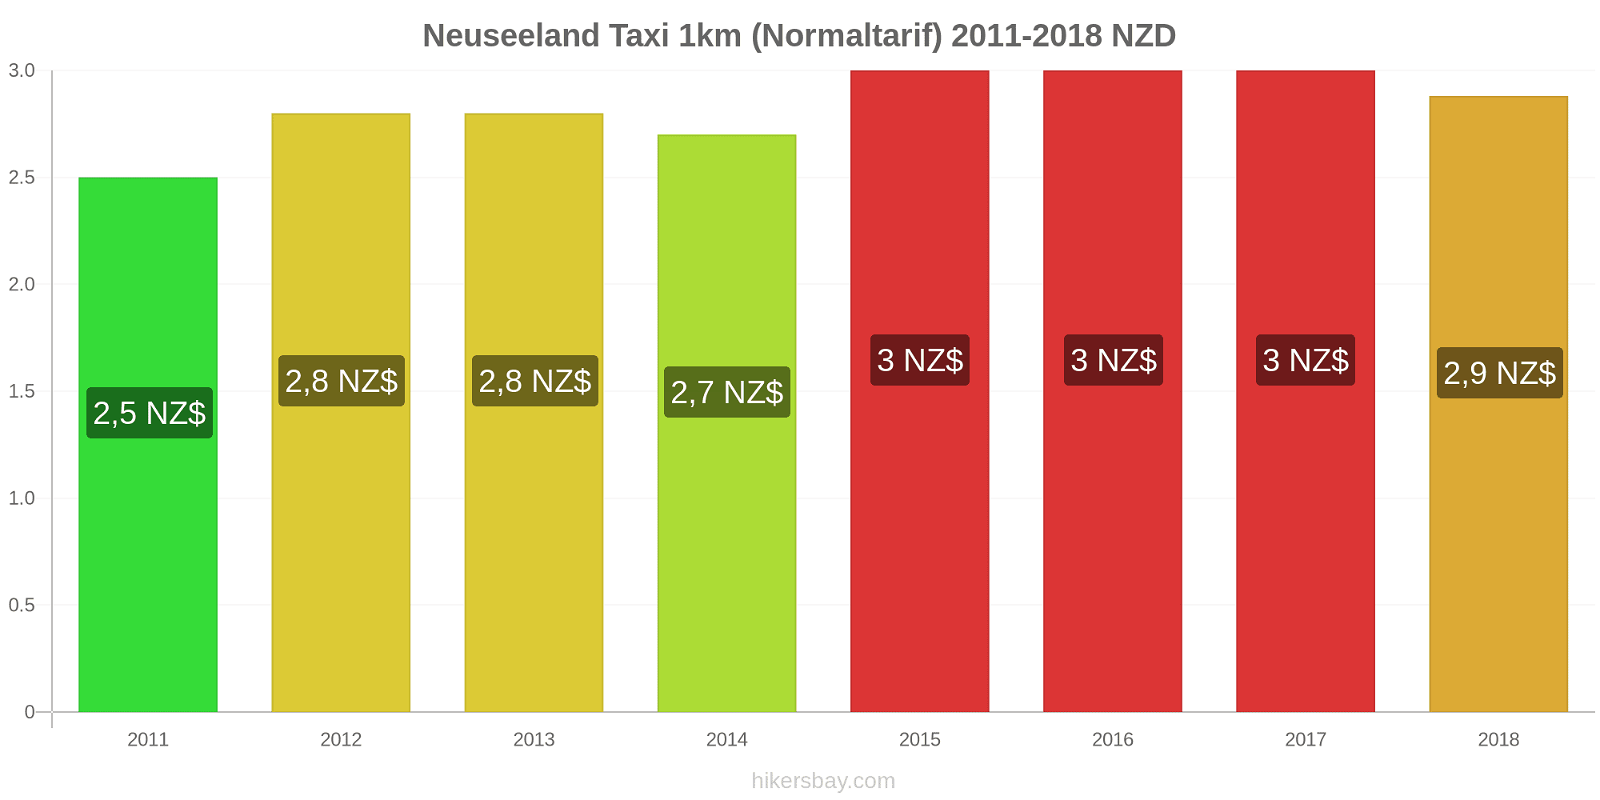 Neuseeland Preisänderungen Taxi 1km (Normaltarif) hikersbay.com